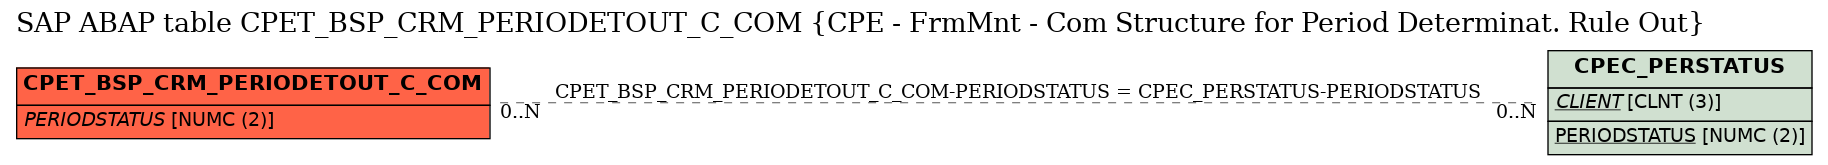 E-R Diagram for table CPET_BSP_CRM_PERIODETOUT_C_COM (CPE - FrmMnt - Com Structure for Period Determinat. Rule Out)